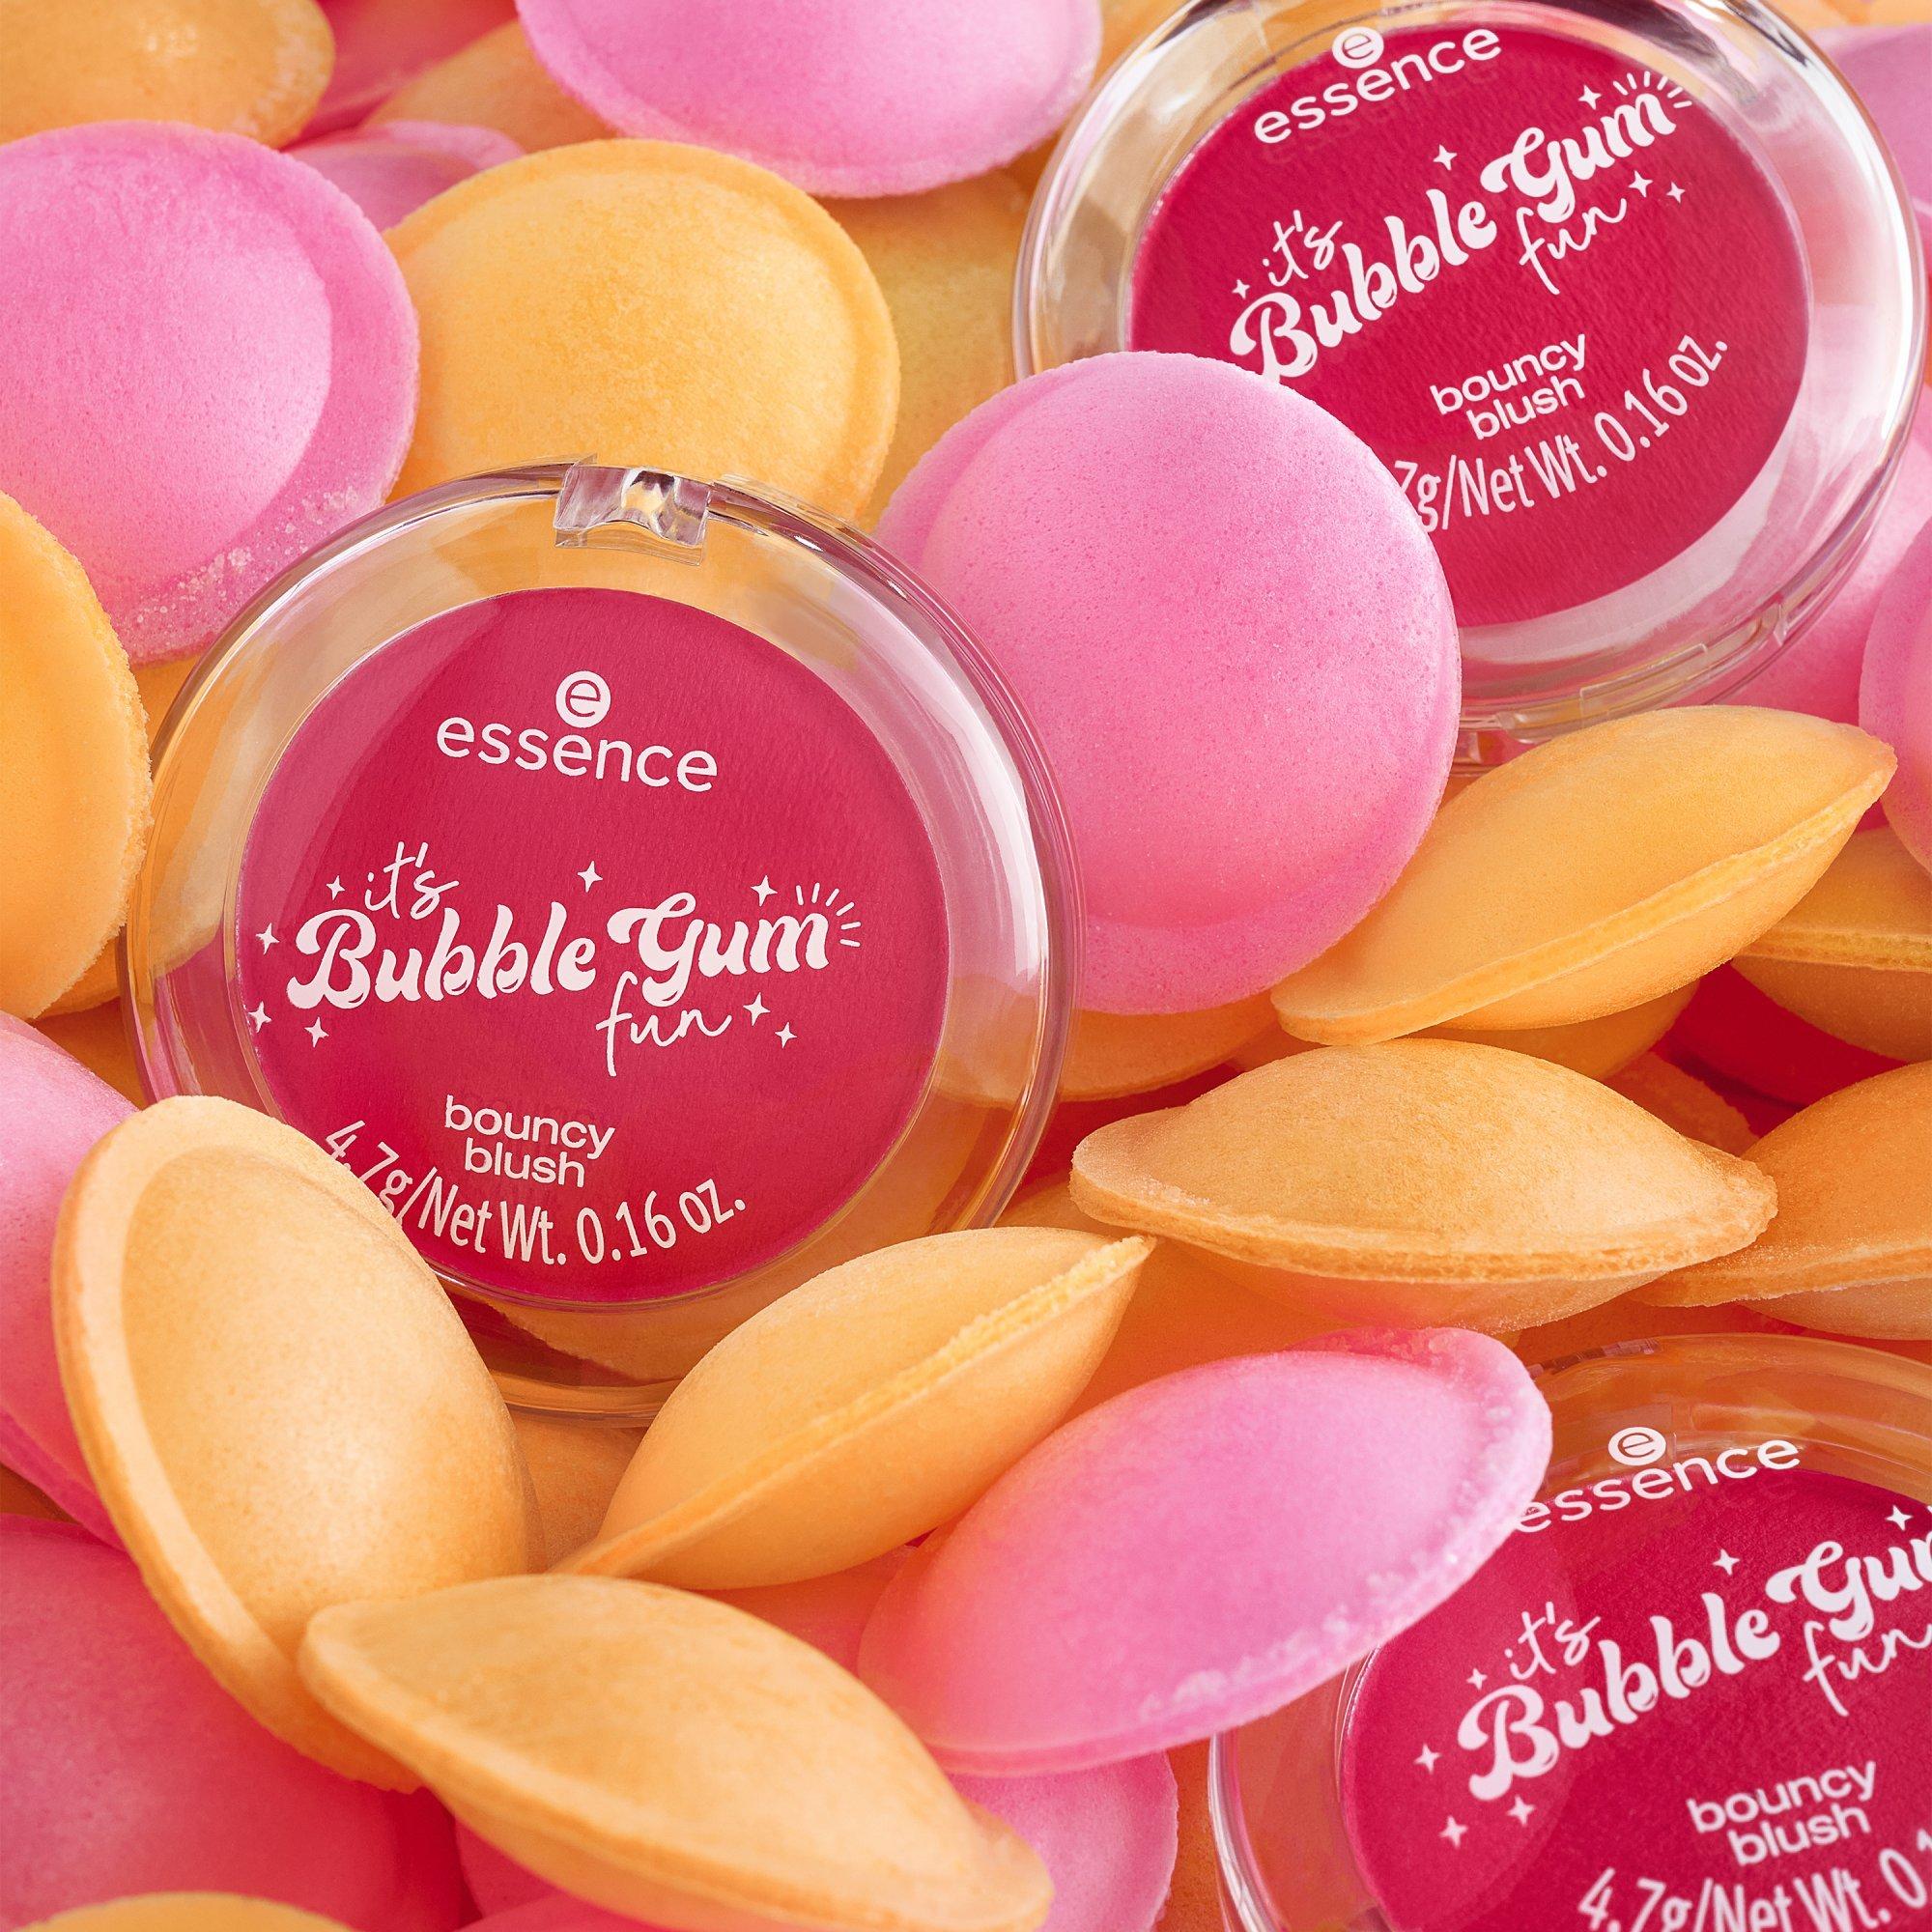 it’s Bubble Gum fun bouncy blush